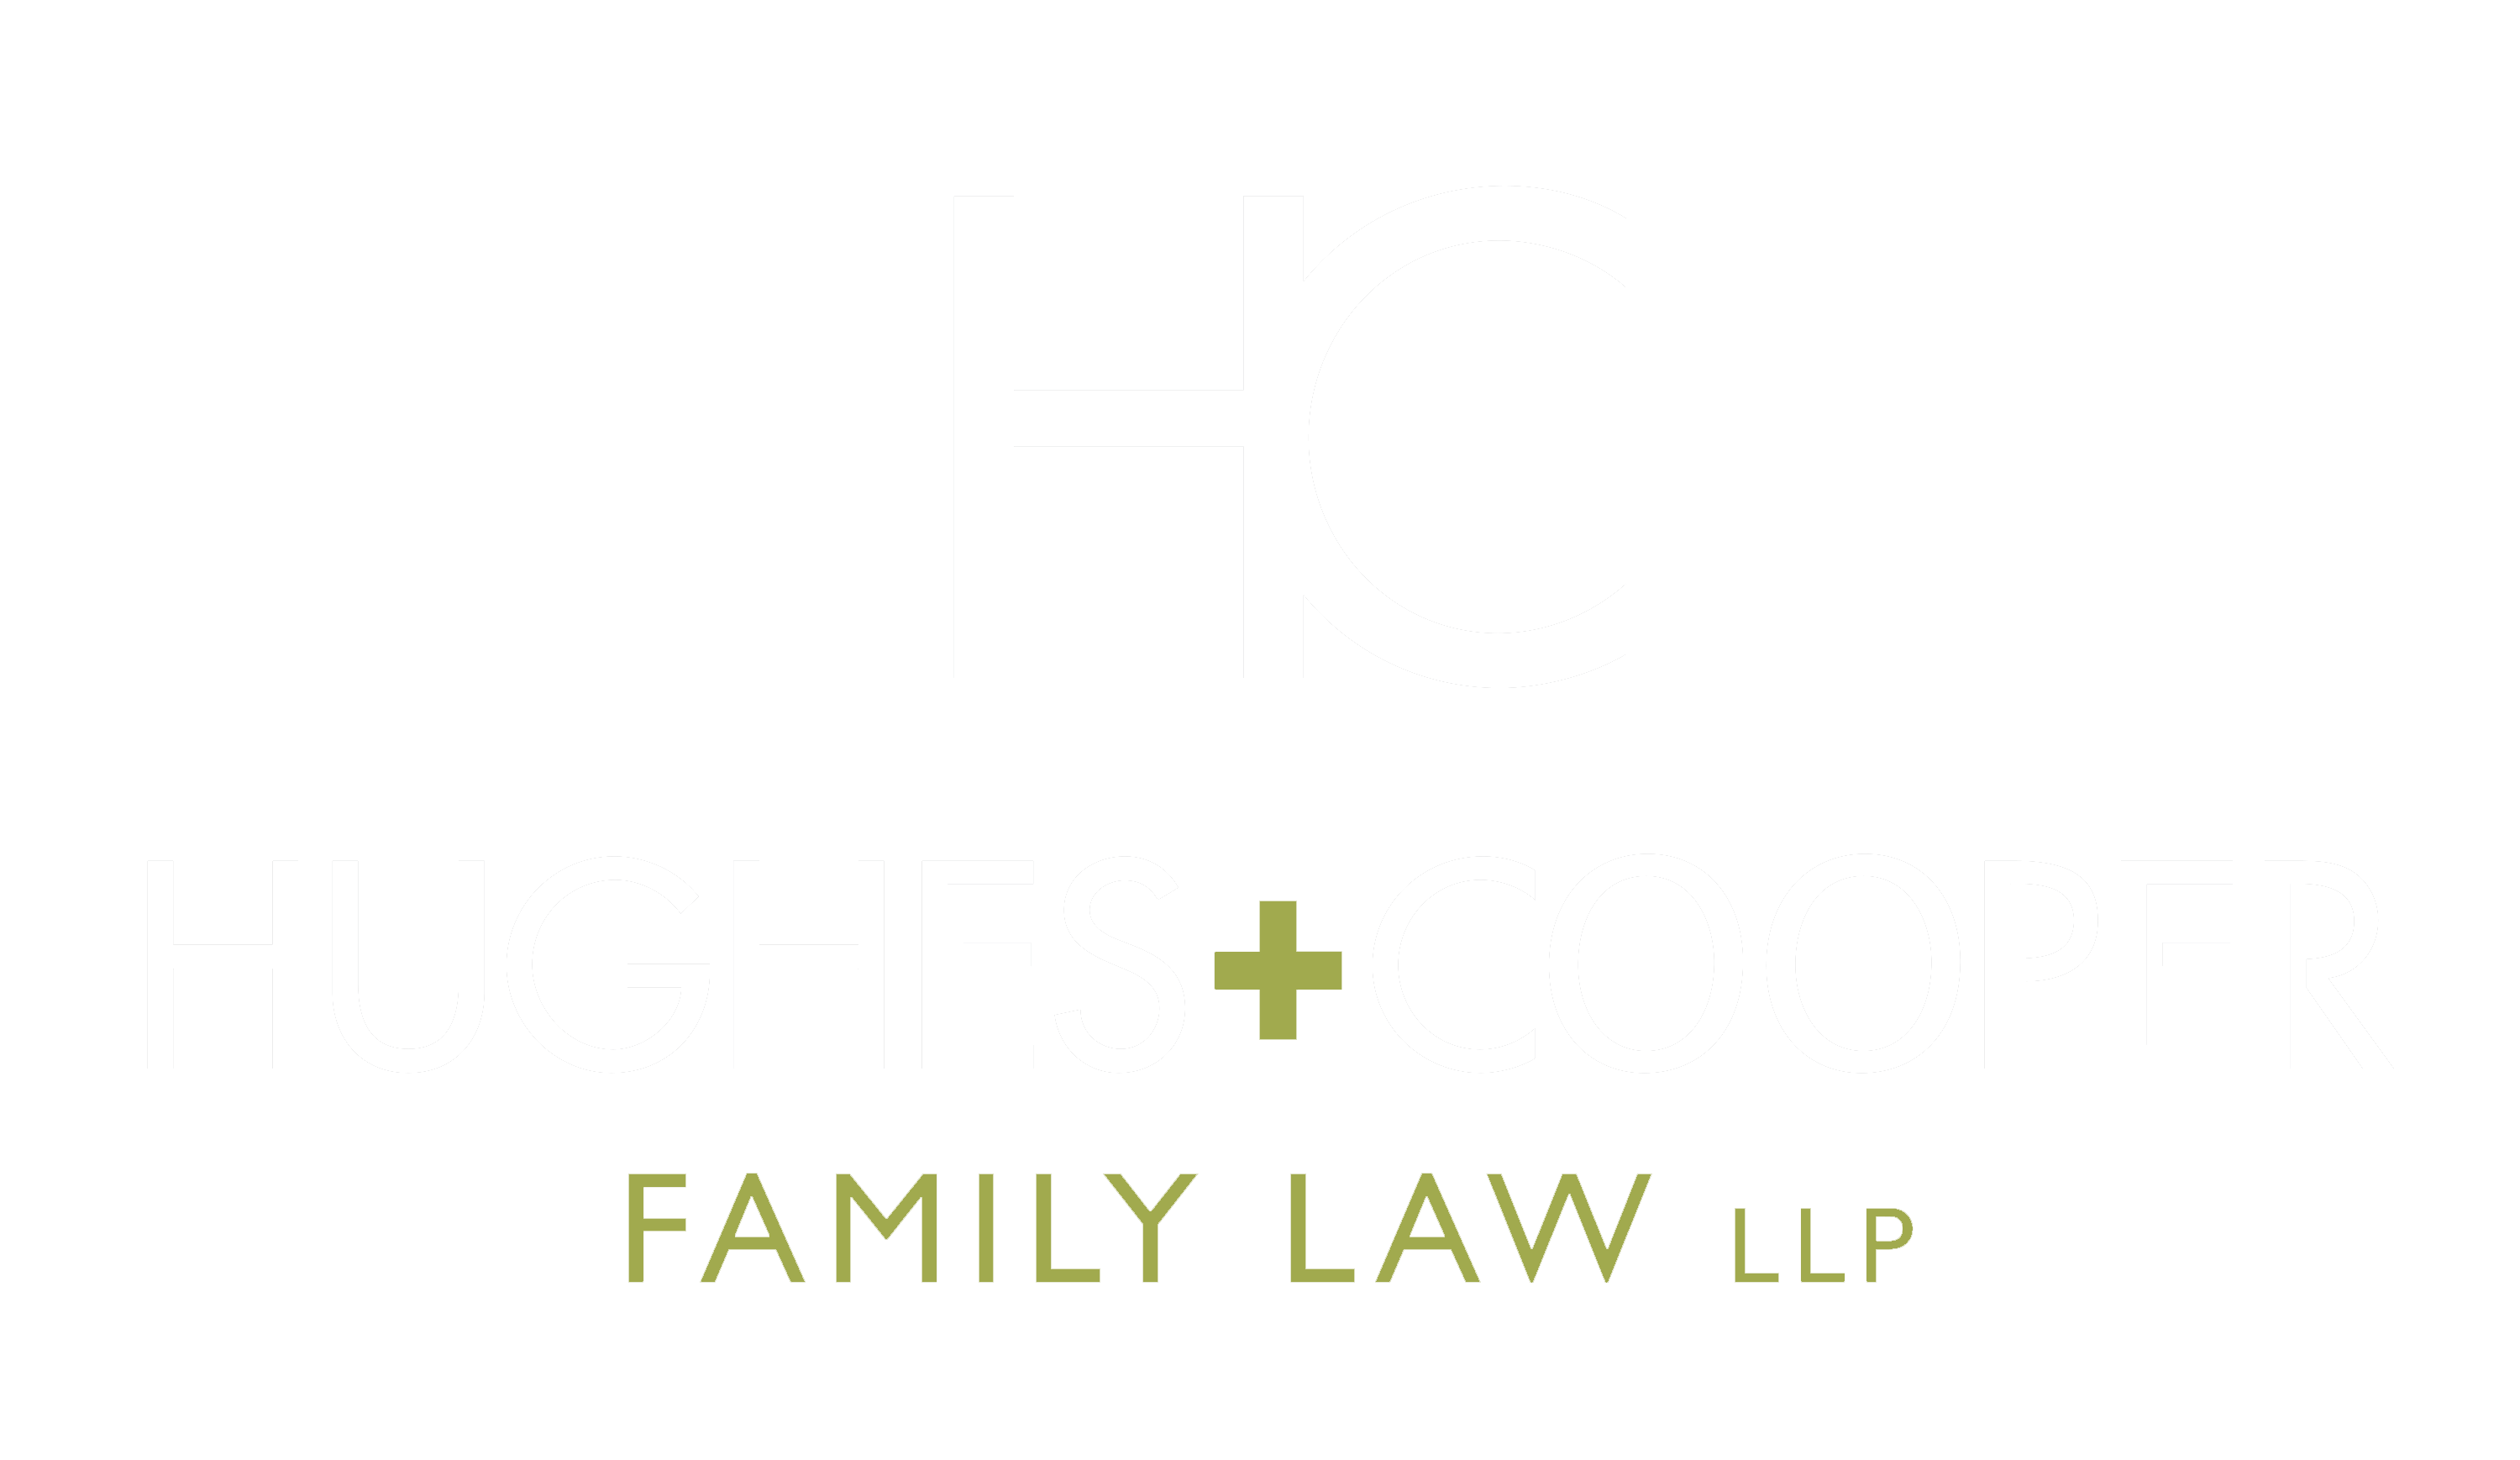 Family Law Associates